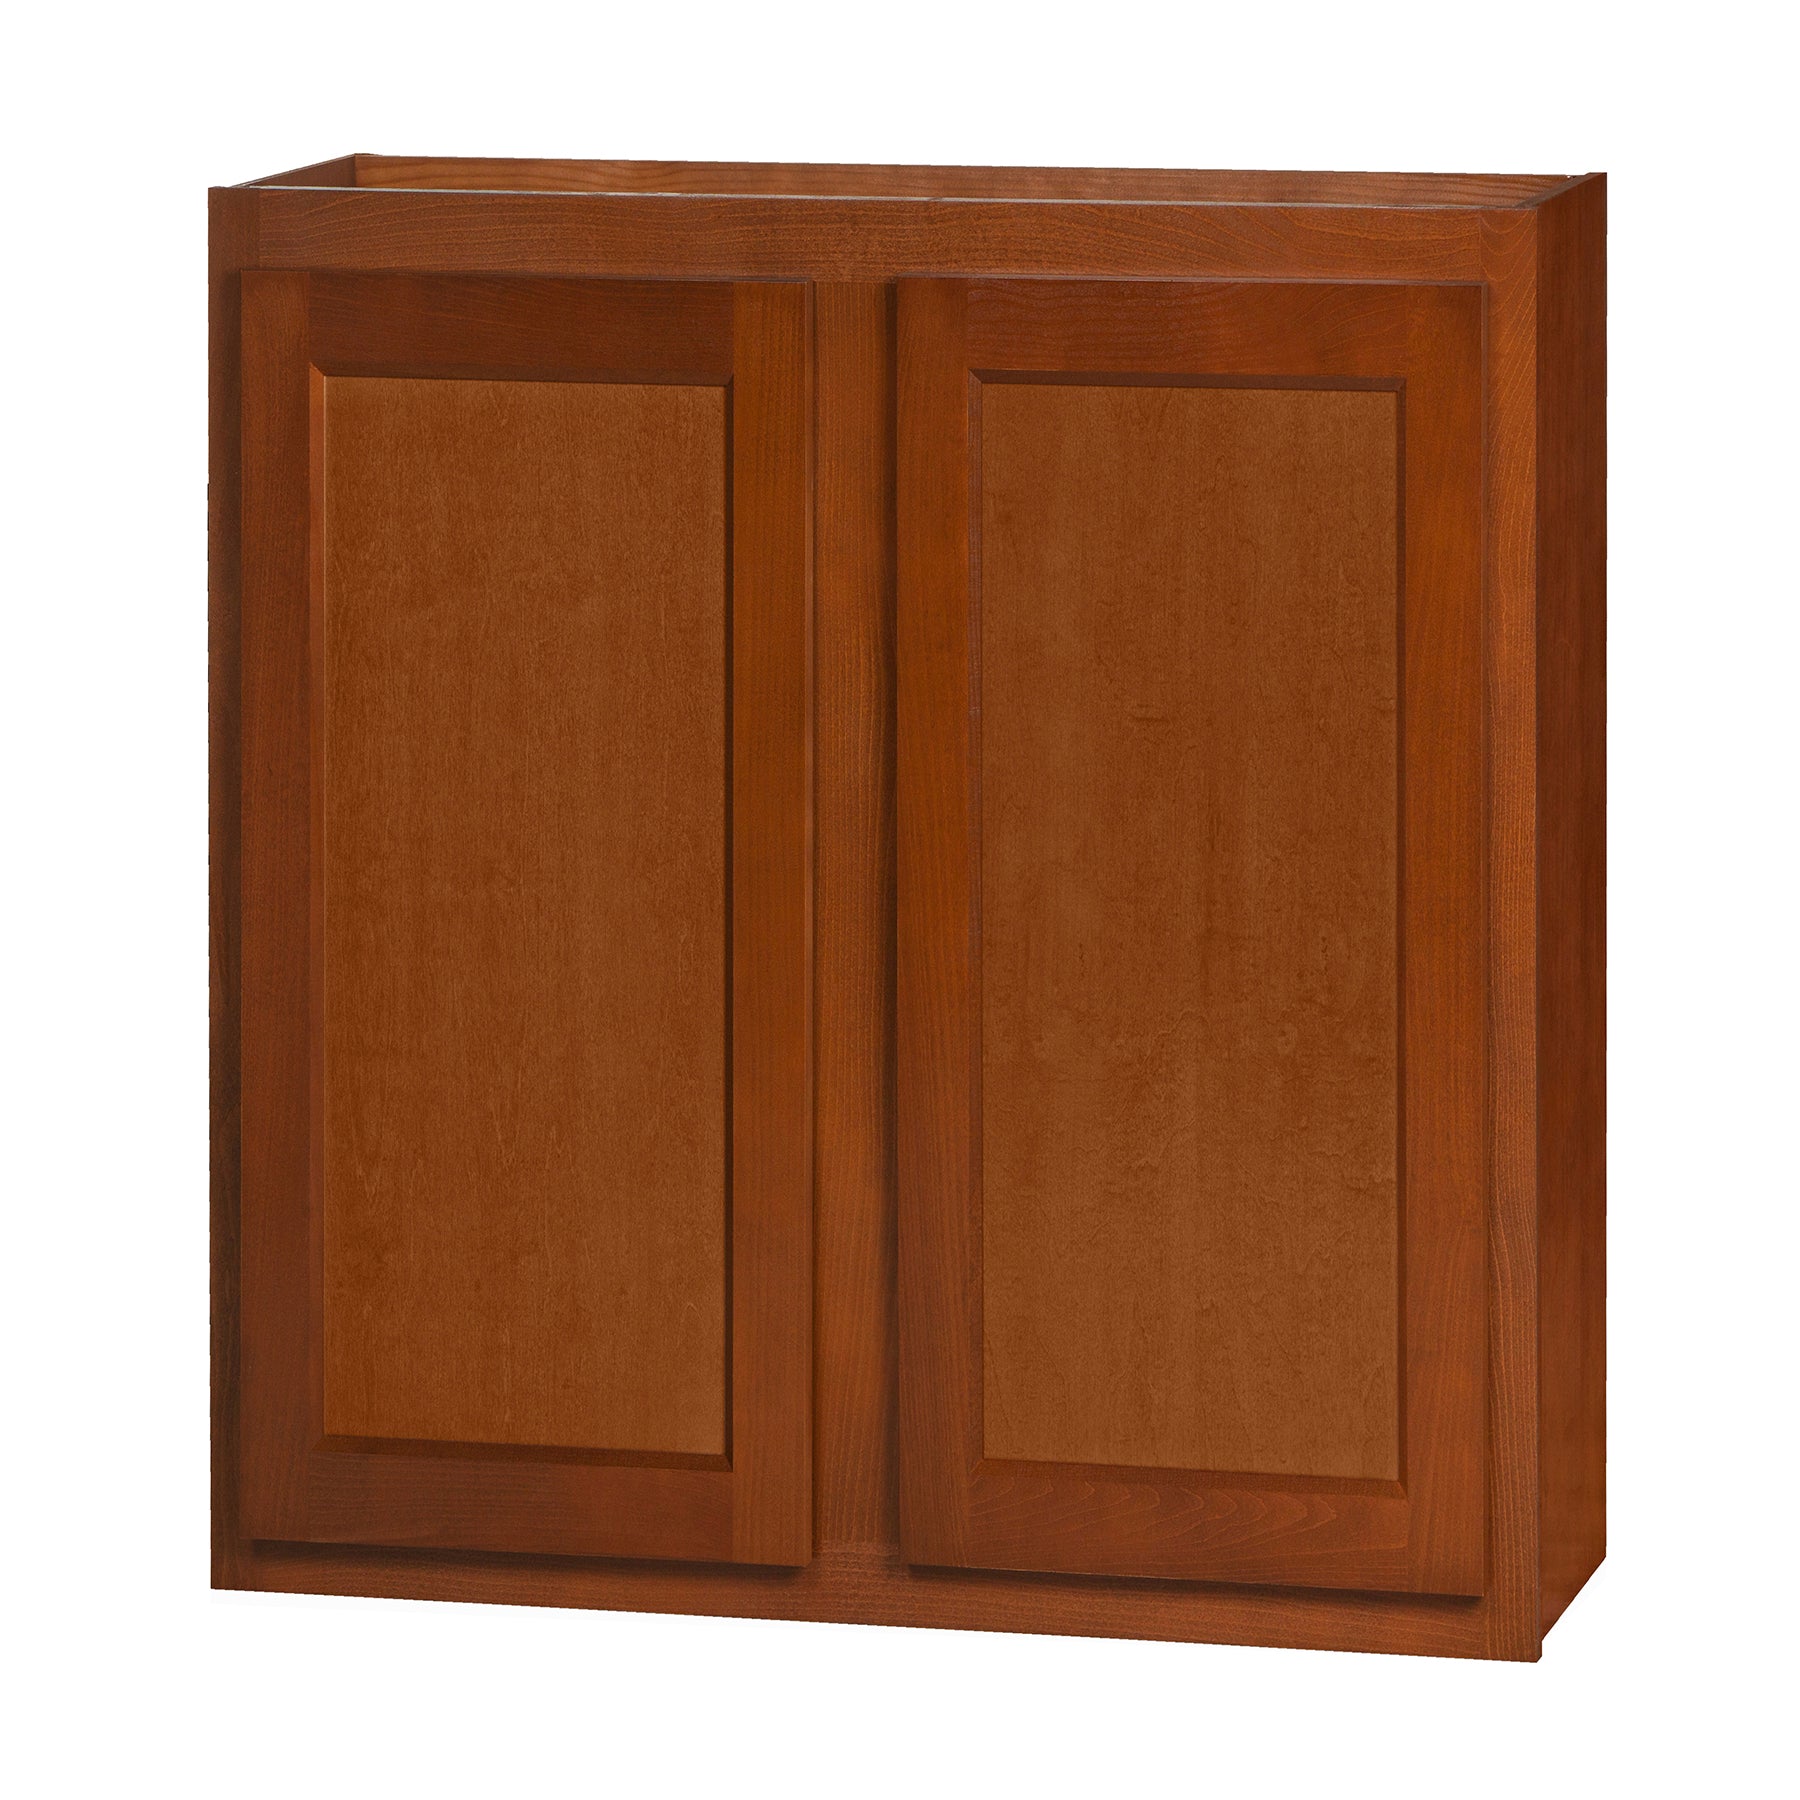 36 inch Wall Cabinets - Glenwood Shaker - 36 Inch W x 36 Inch H x 12 Inch D